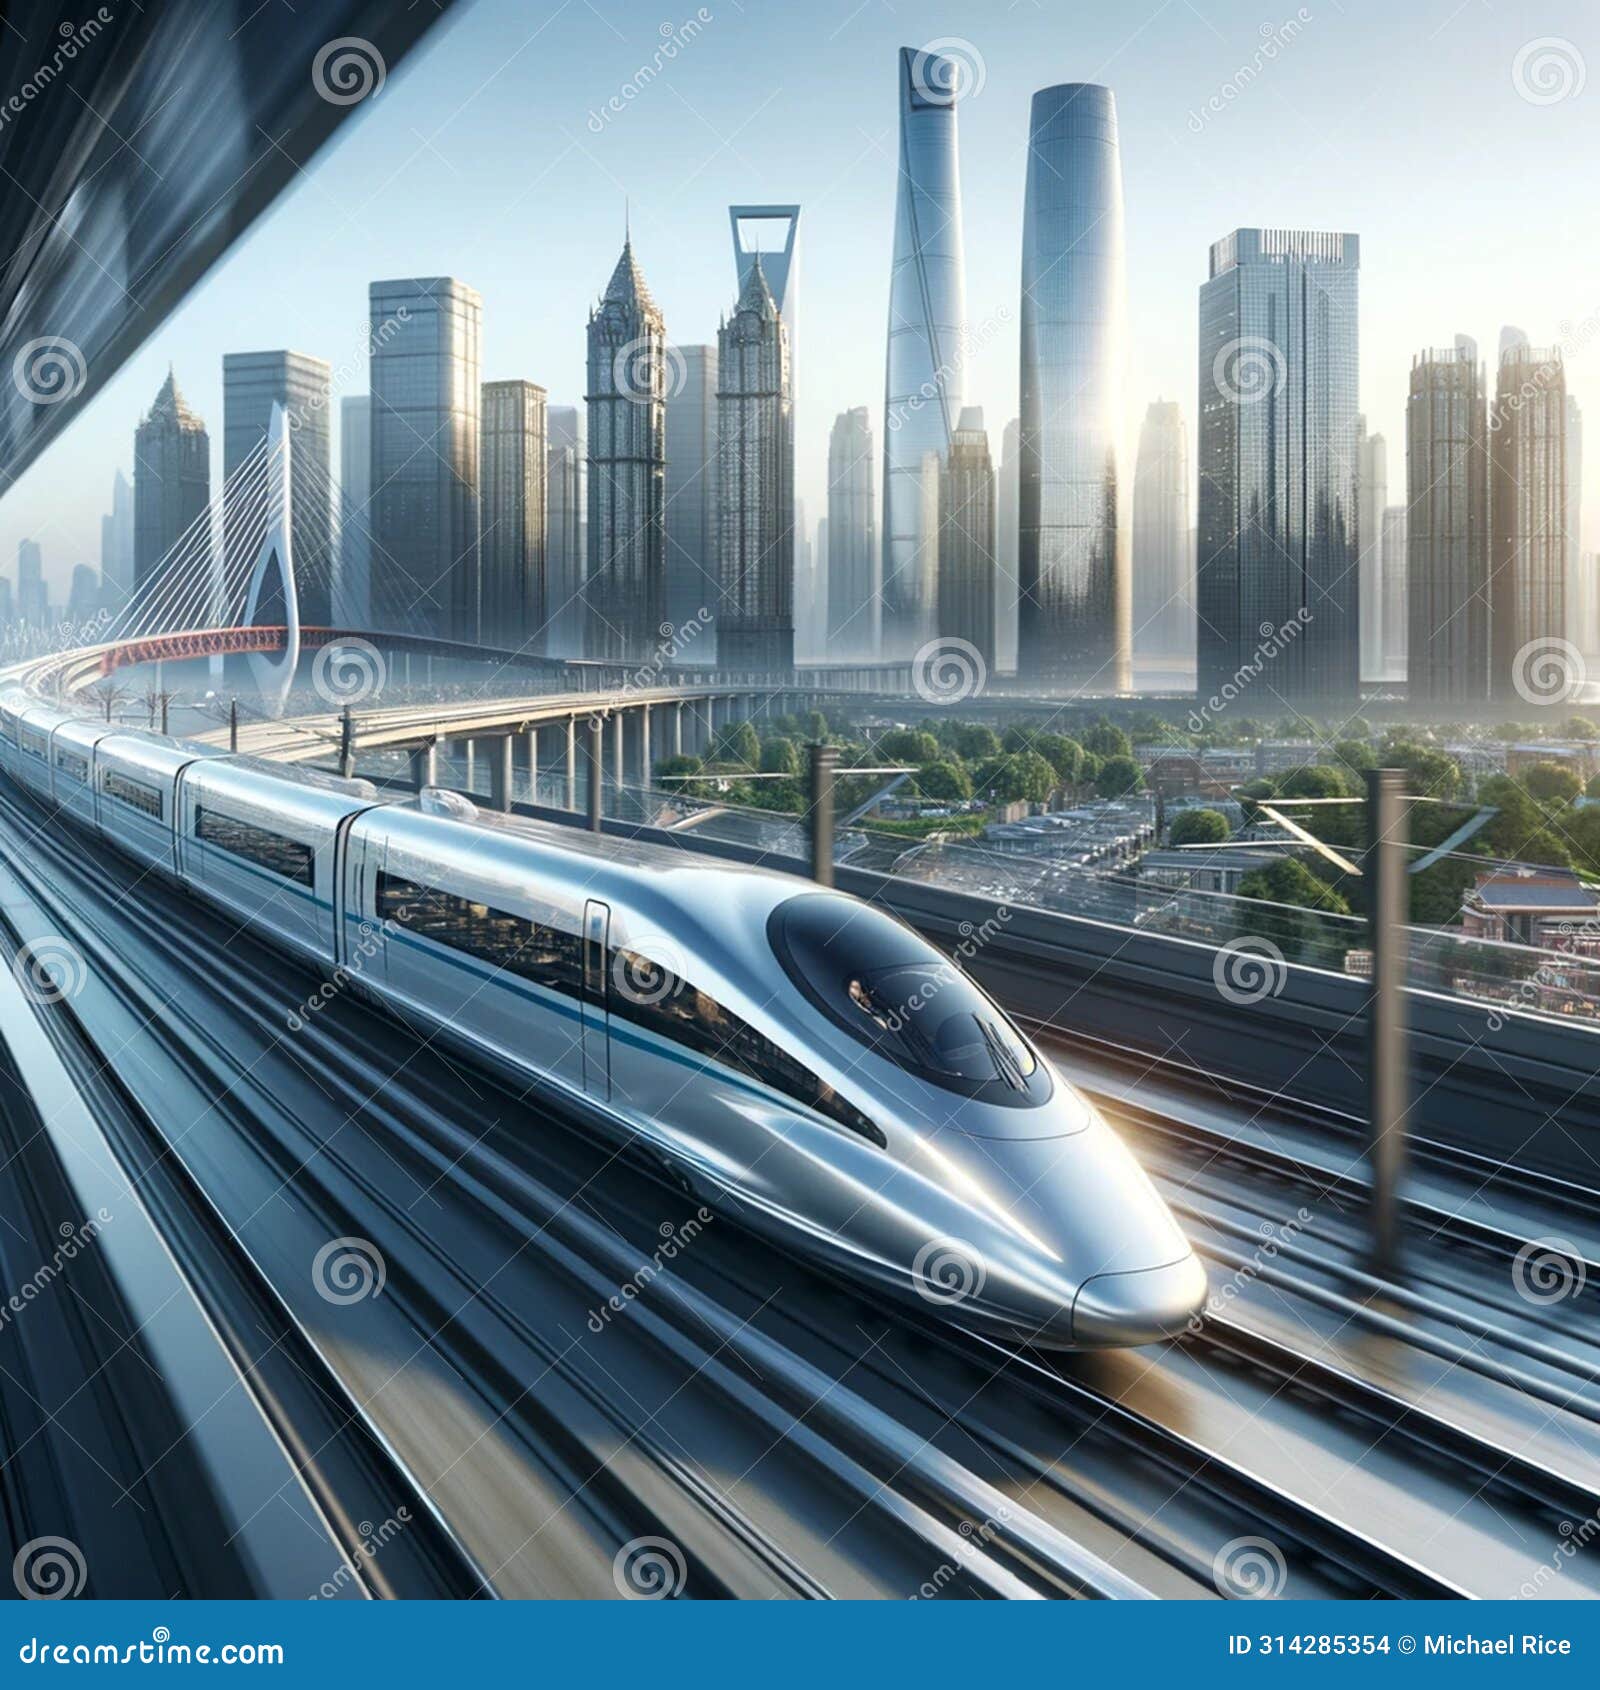 city of tomorrow: futuristic skyline with highspeed train